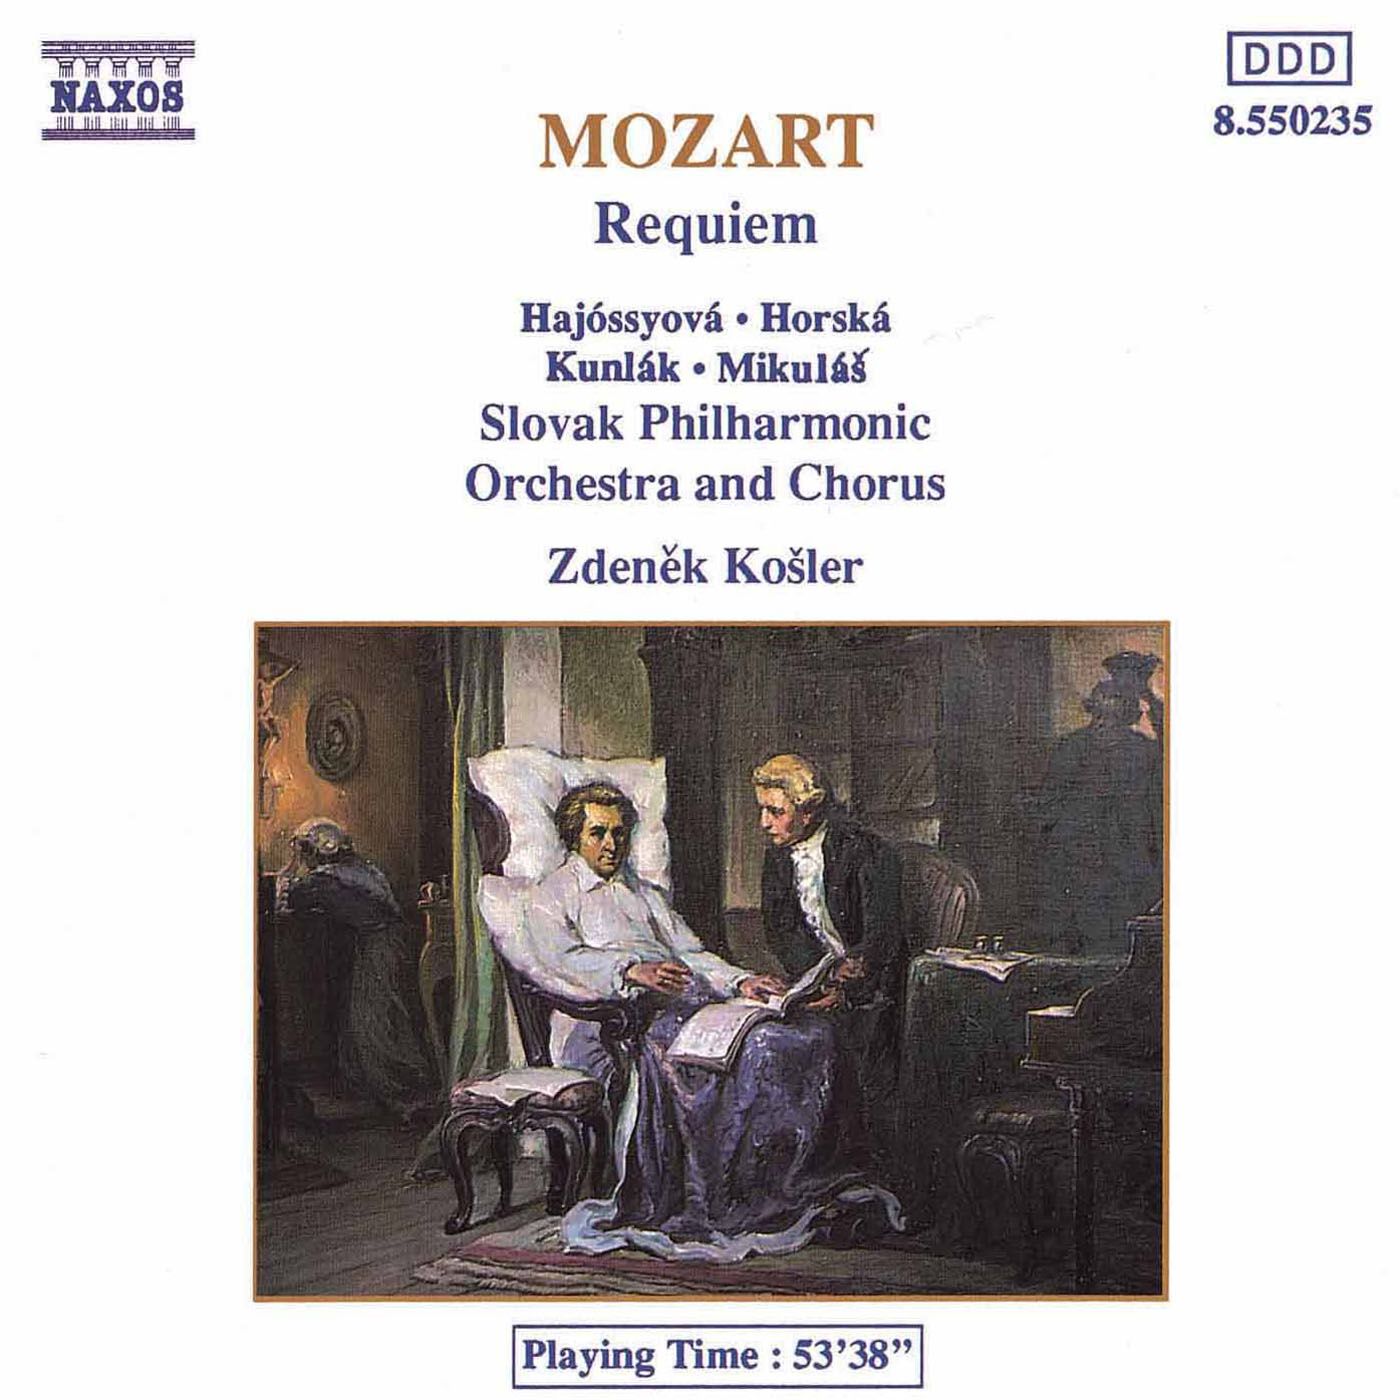 Моцарт реквием послушать. Моцарт. Реквием. Jordi Savall - w. a. Mozart_ Requiem in d Minor, k. 626. Моцарт Реквием картинки пластинок.